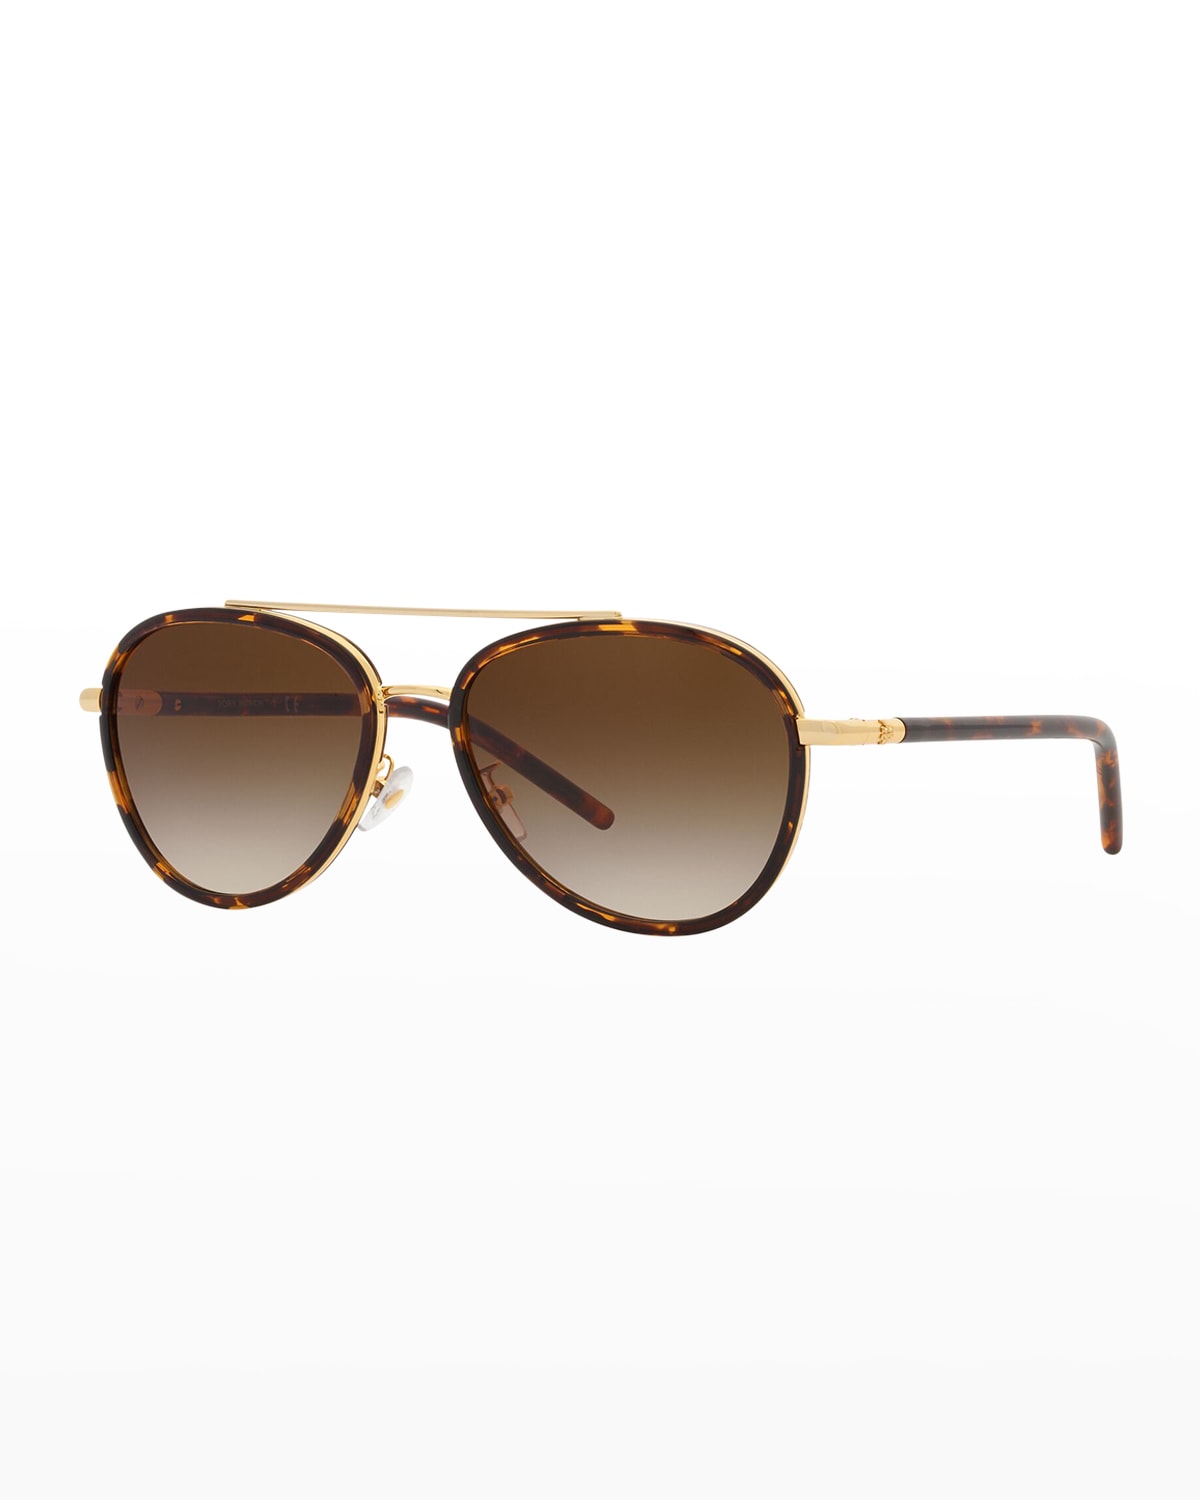 Tory Burch Aviator Metal Sunglasses | Neiman Marcus